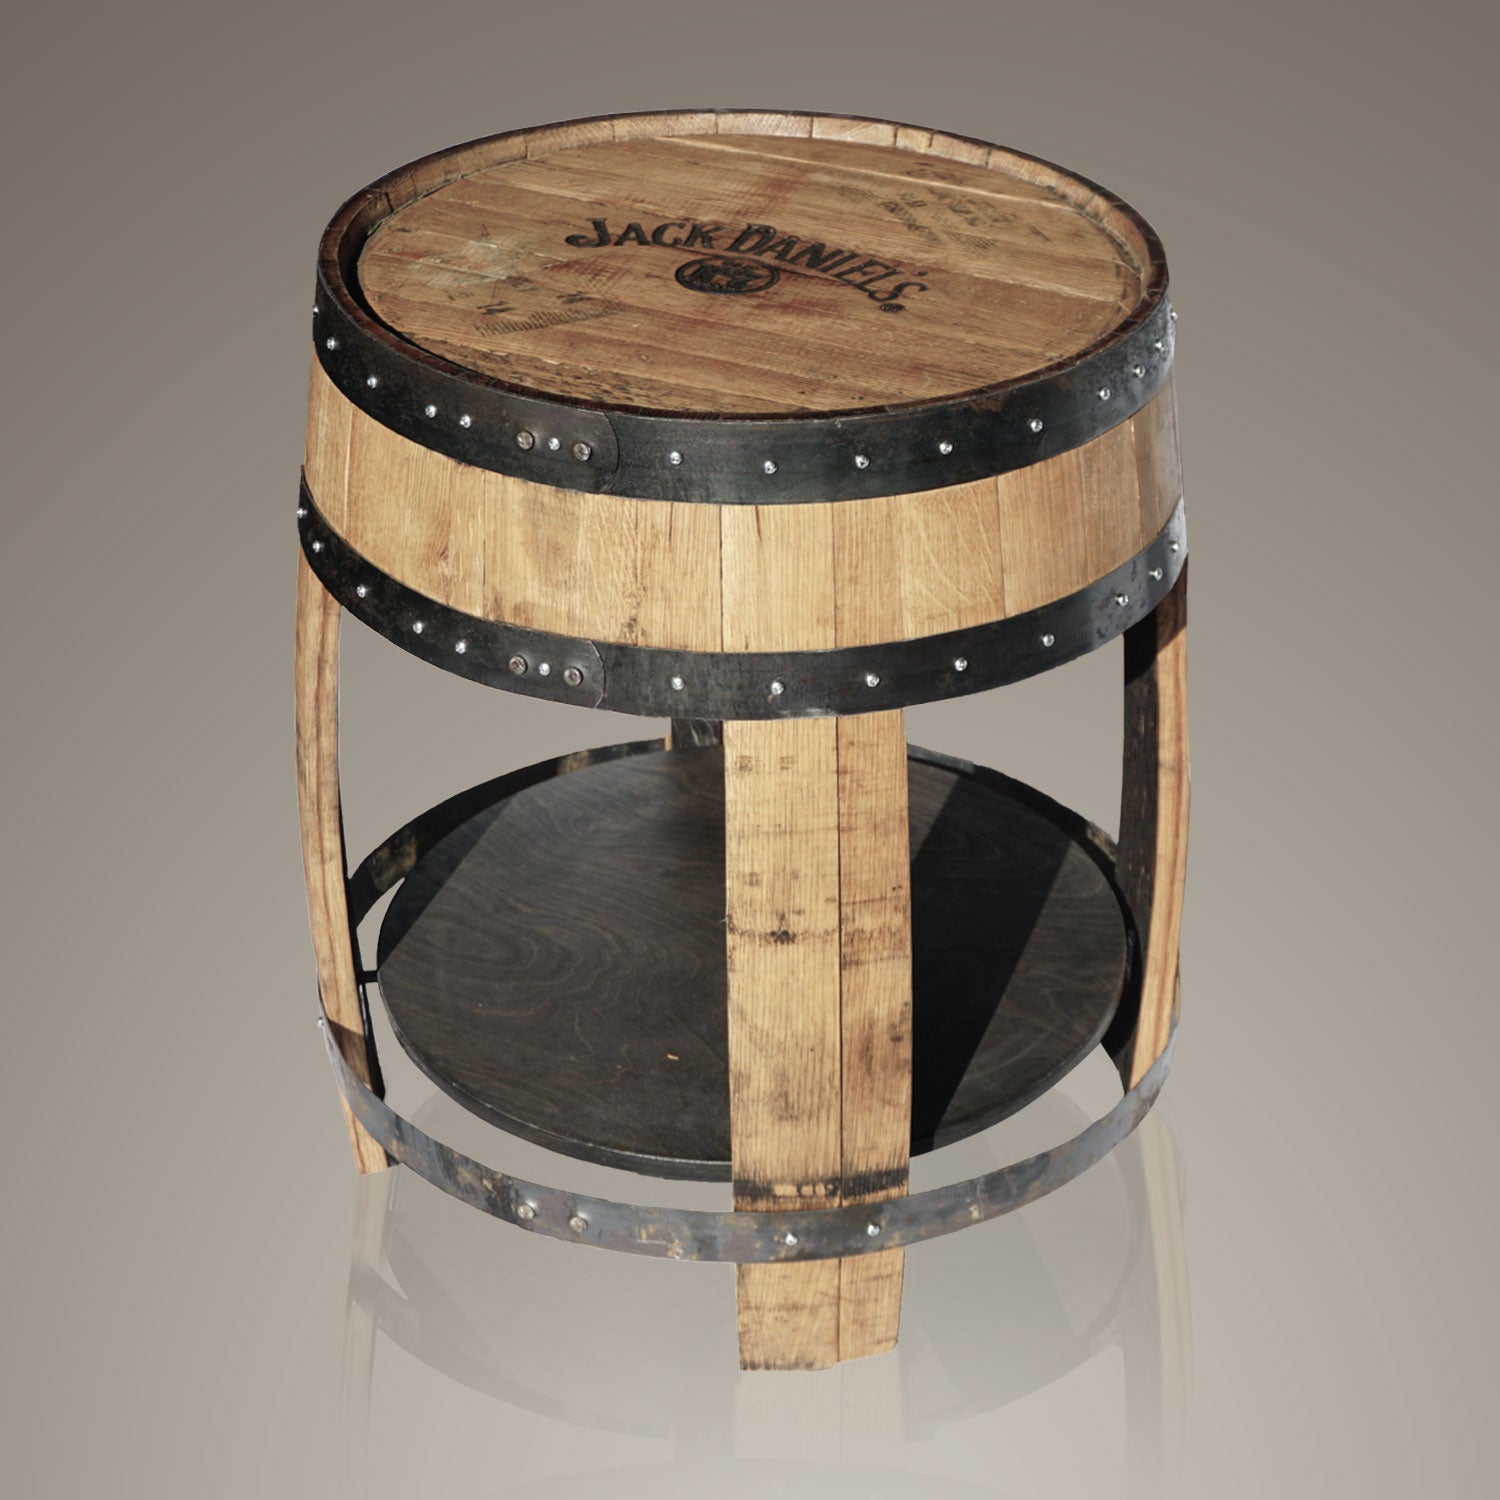 Jack Daniels Whiskey Barrel Oversized Table Rare T